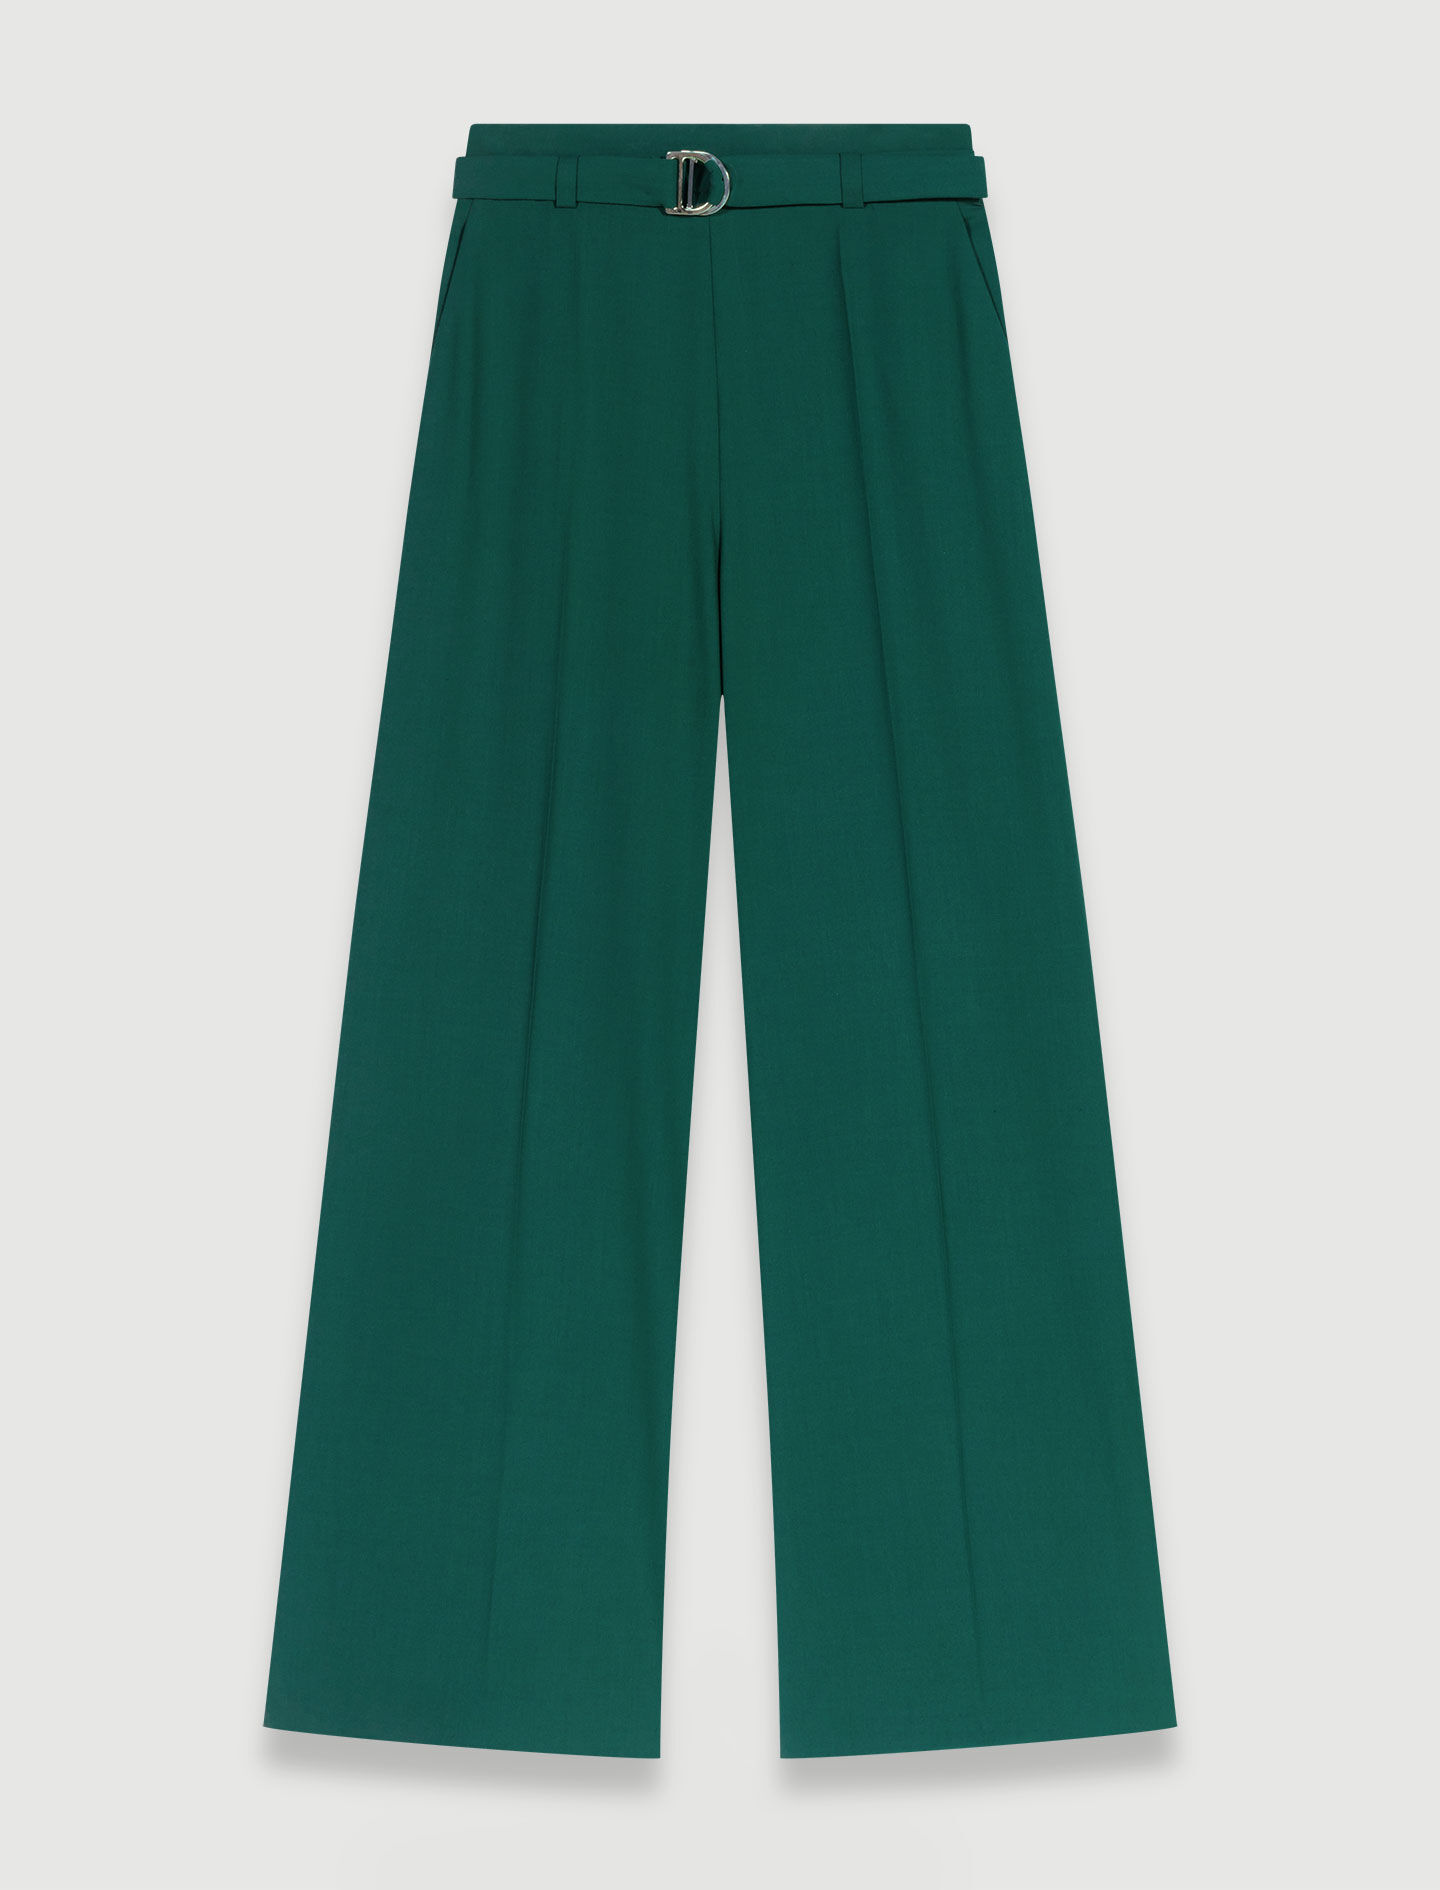 Dartmouth Green Textured Premium Wool-Blend Pant For Men